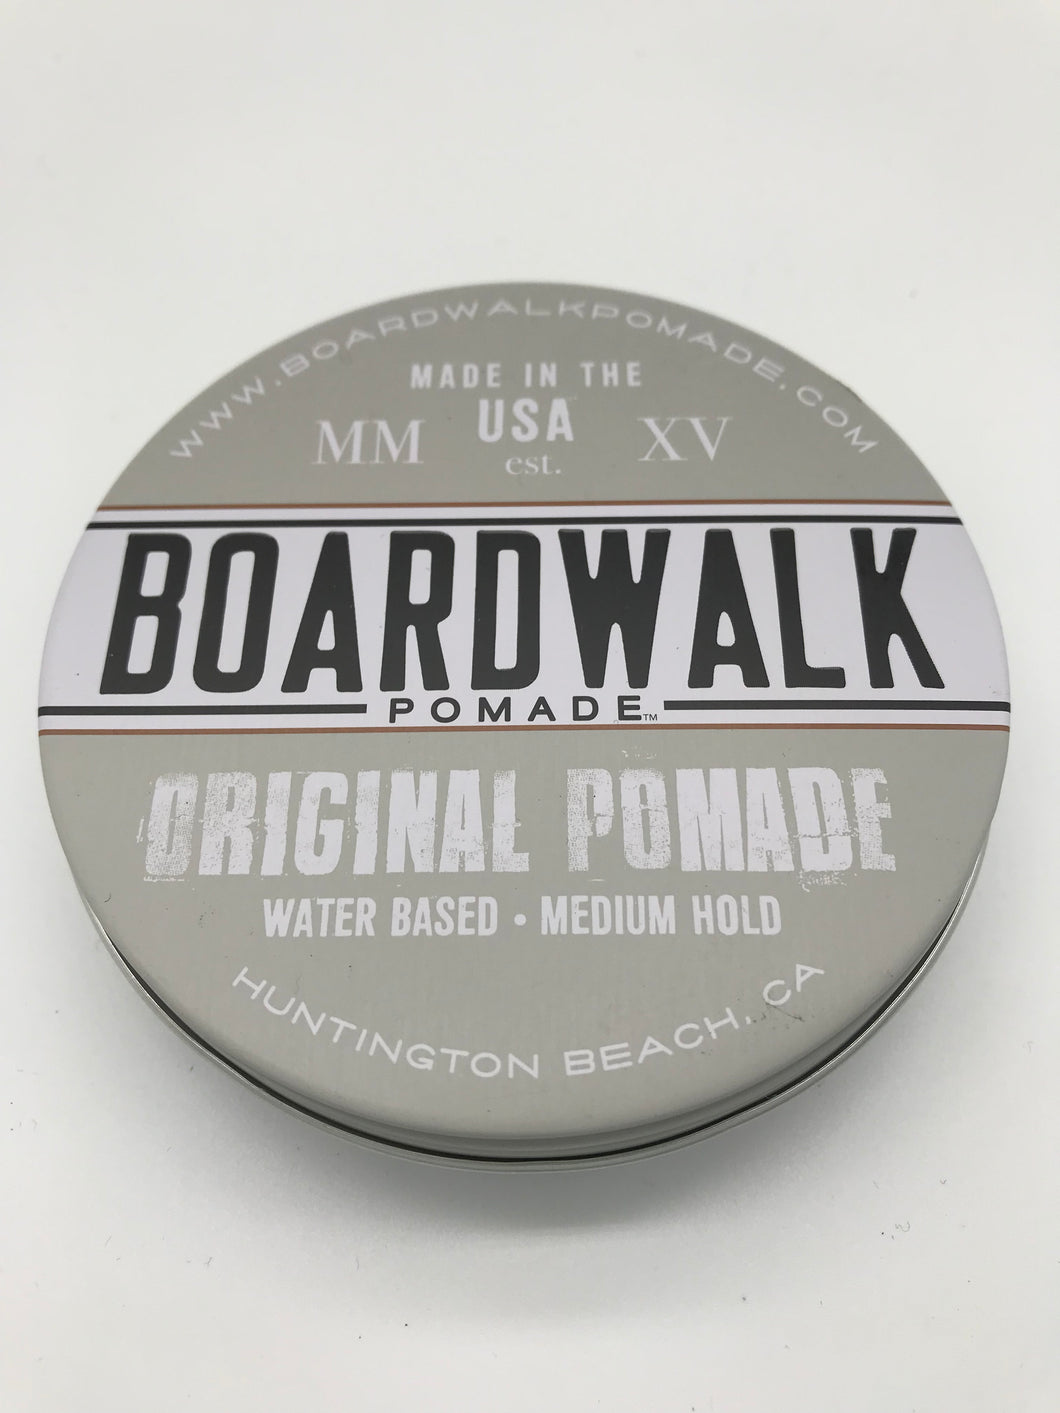 Boardwalk Strong Hold Pomade